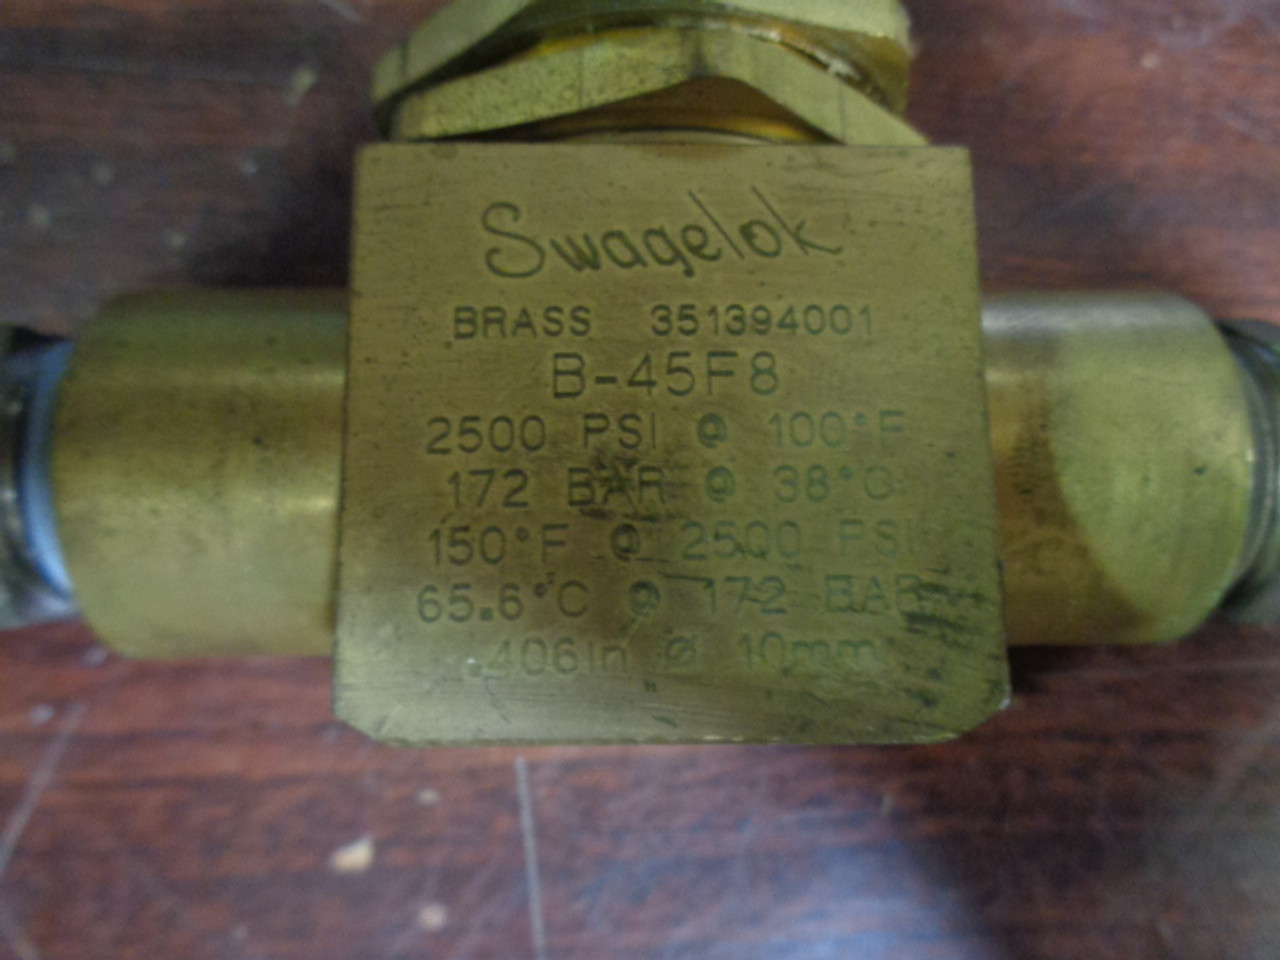 Swagelok B-45F8 Brass Valve2